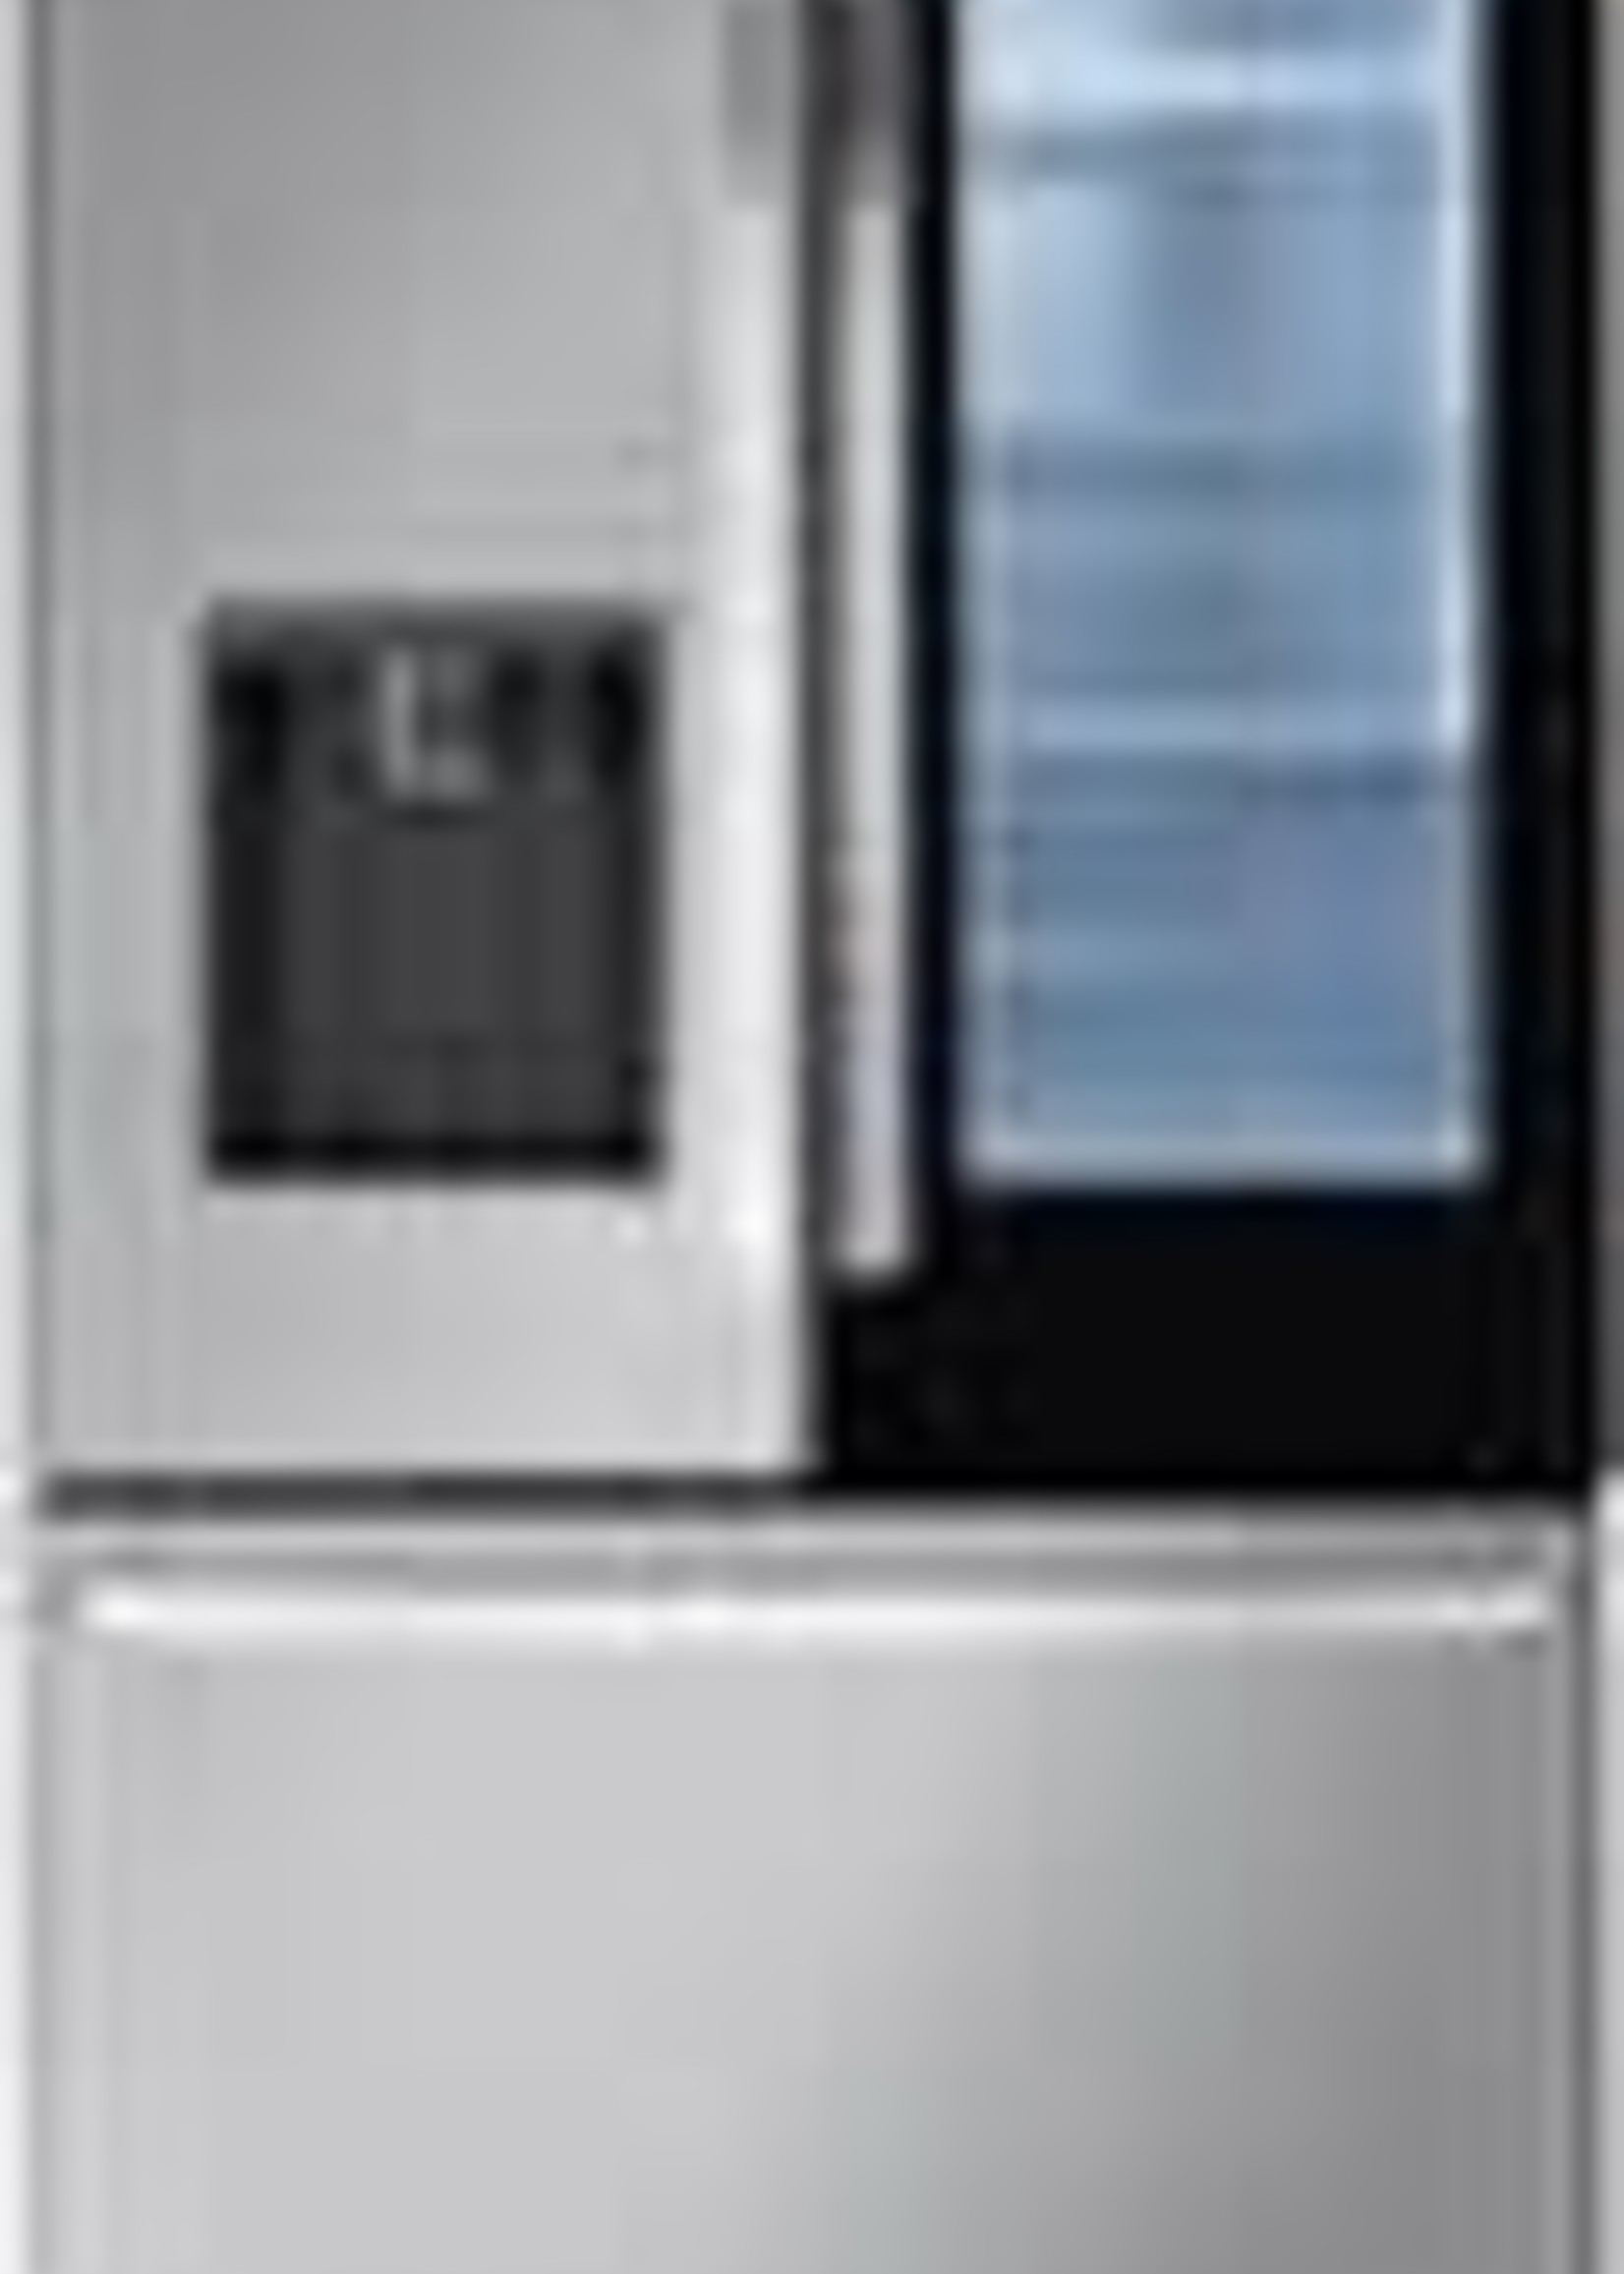 LG *LG LRFOC2606S  26 cu. ft. Smart InstaView Counter Depth MAX French Door Refrigerator in PrintProof Stainless Steel